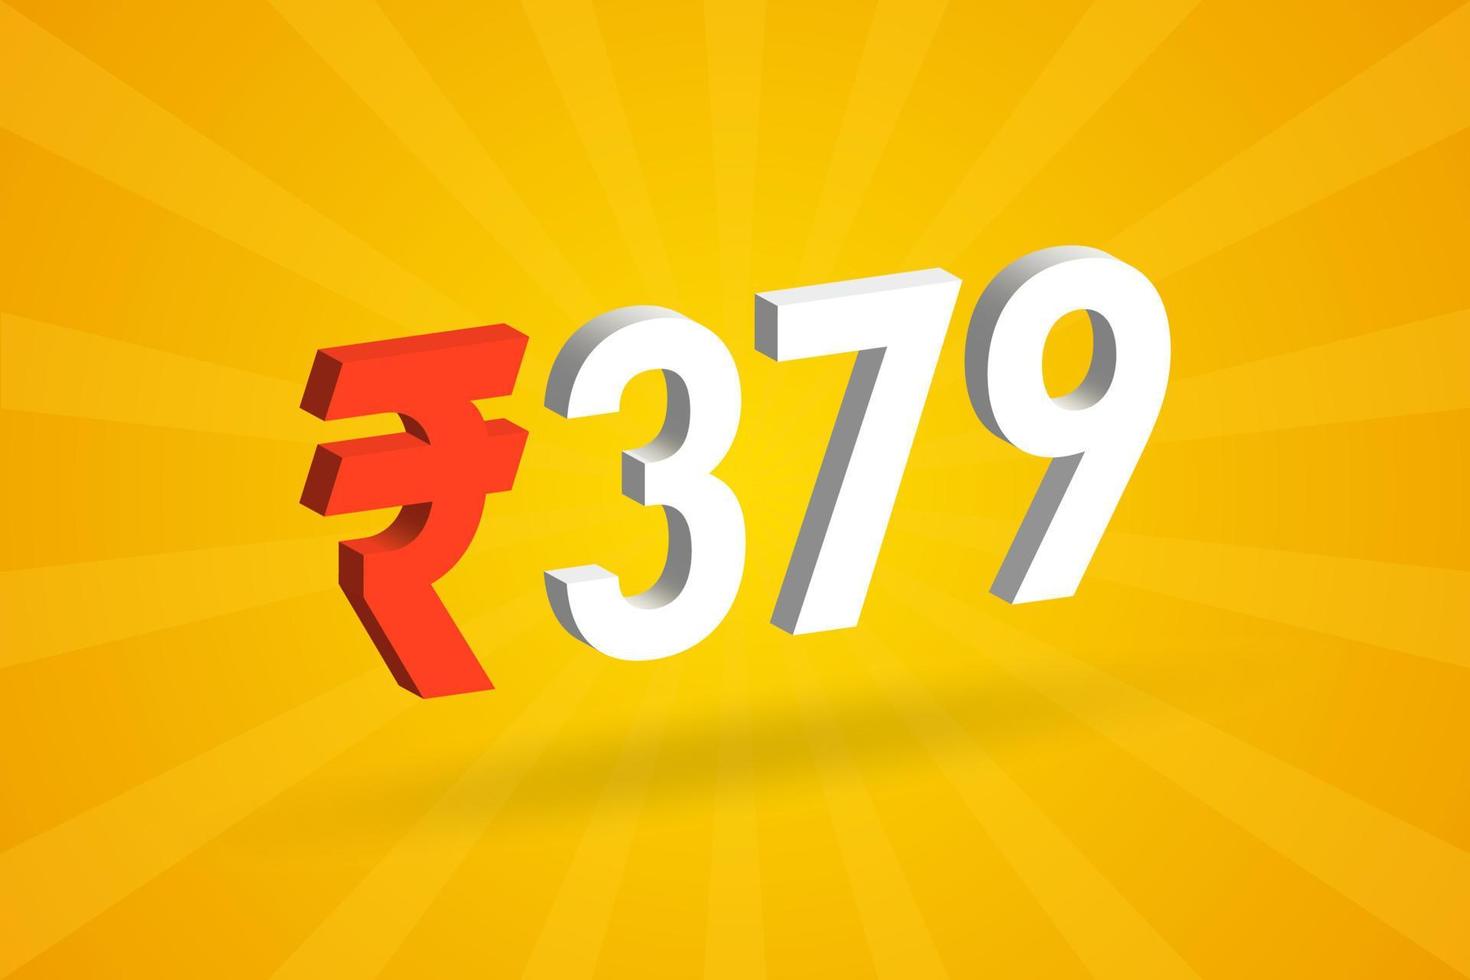 379 rupias símbolo 3d imagen vectorial de texto en negrita. 3d 379 rupia india signo de moneda ilustración vectorial vector